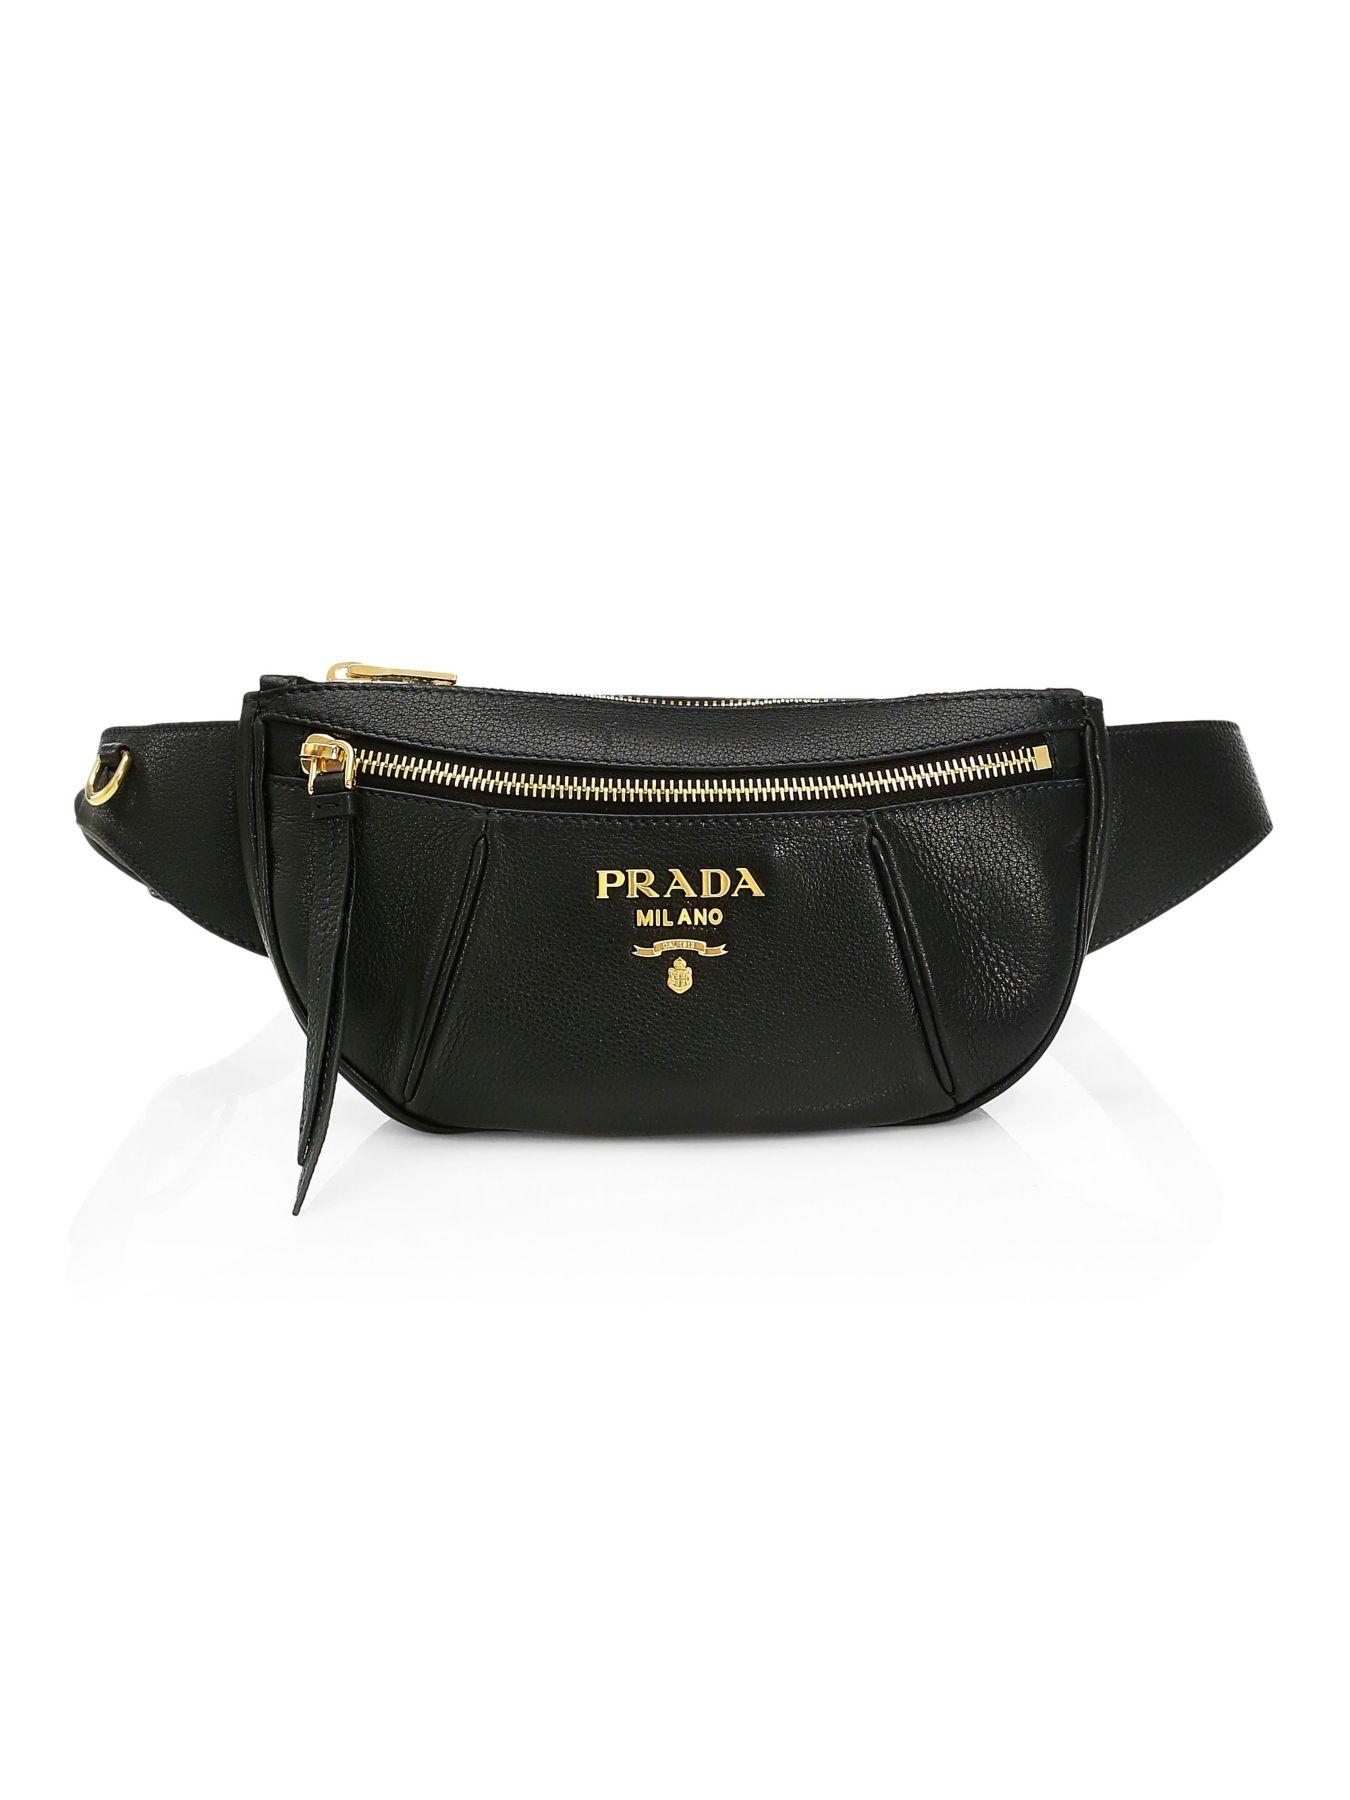 Prada Small Daino Leather Belt Bag in Black - Lyst